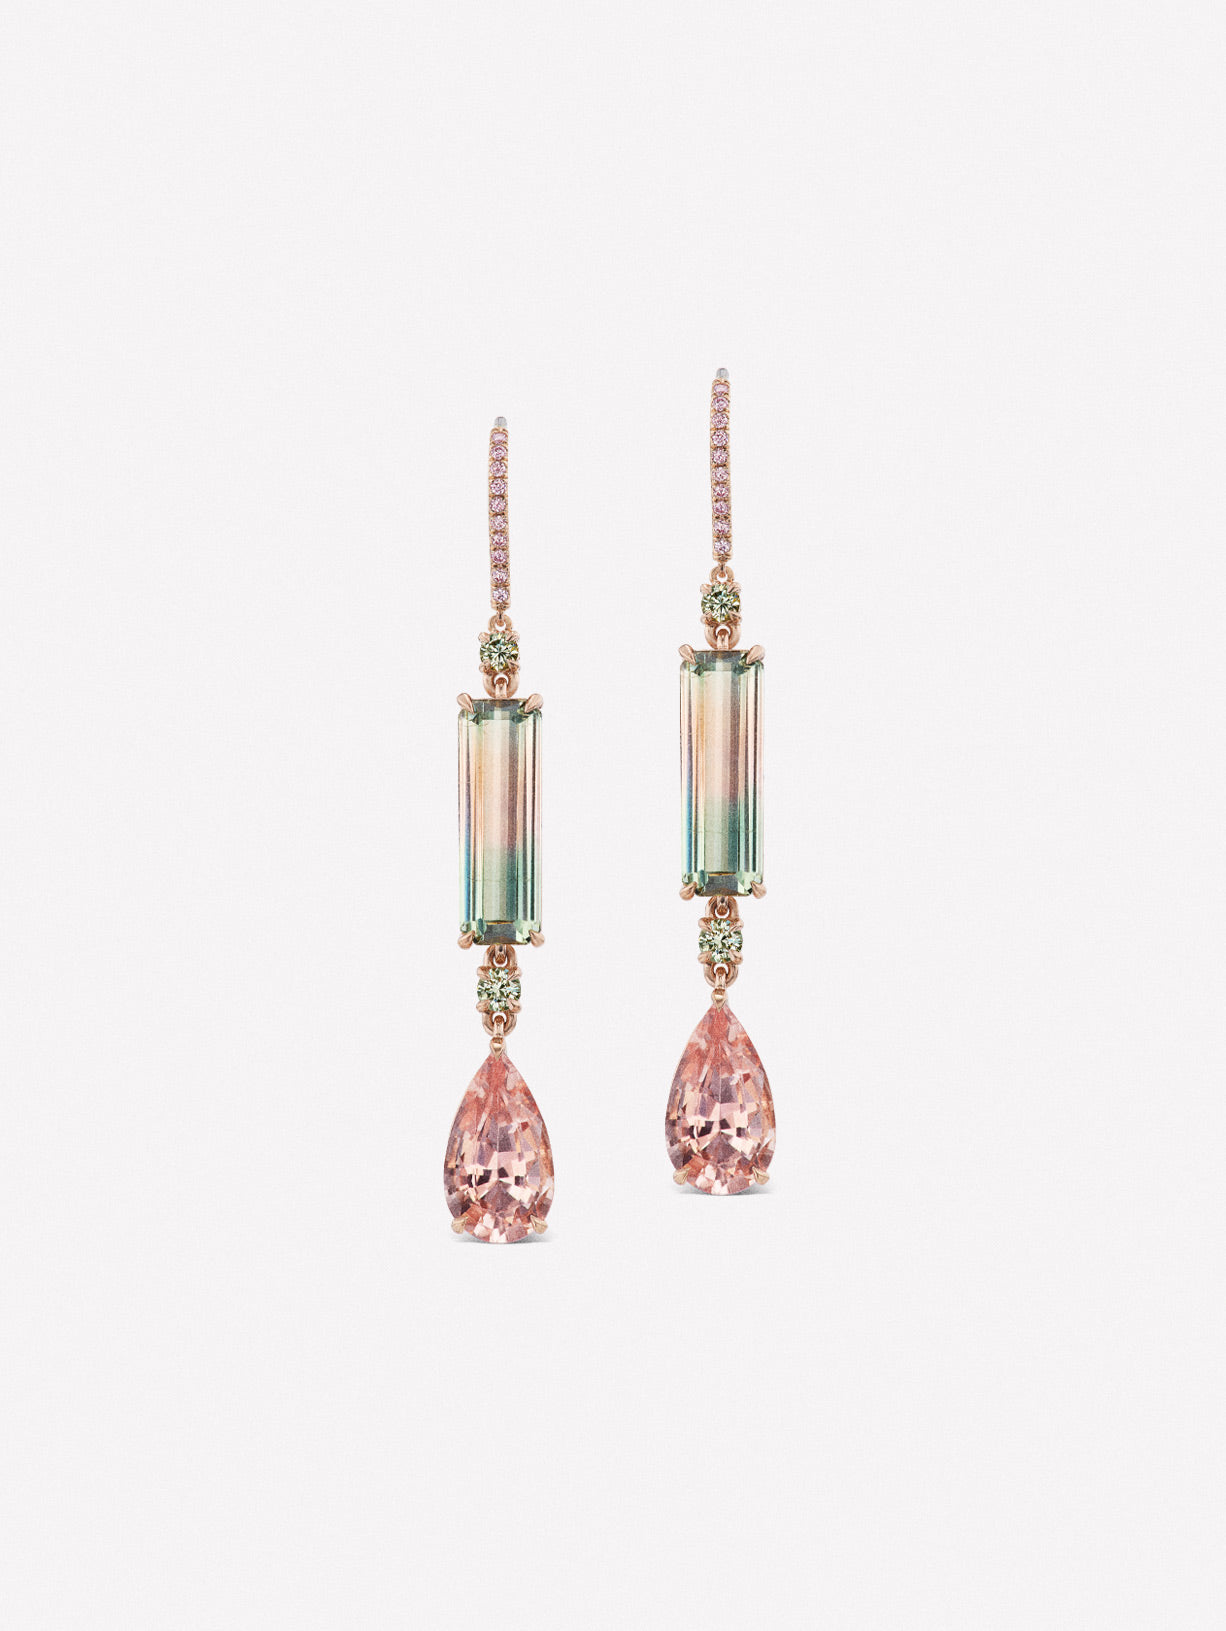 Argyle Pink™ Diamond with Bi Color Tourmaline and Morganite Earrings - Pink Diamonds, J FINE - J Fine, earrings - Pink Diamond Jewelry, argyle-pink™-diamond-with-tourmaline-and-morganite-